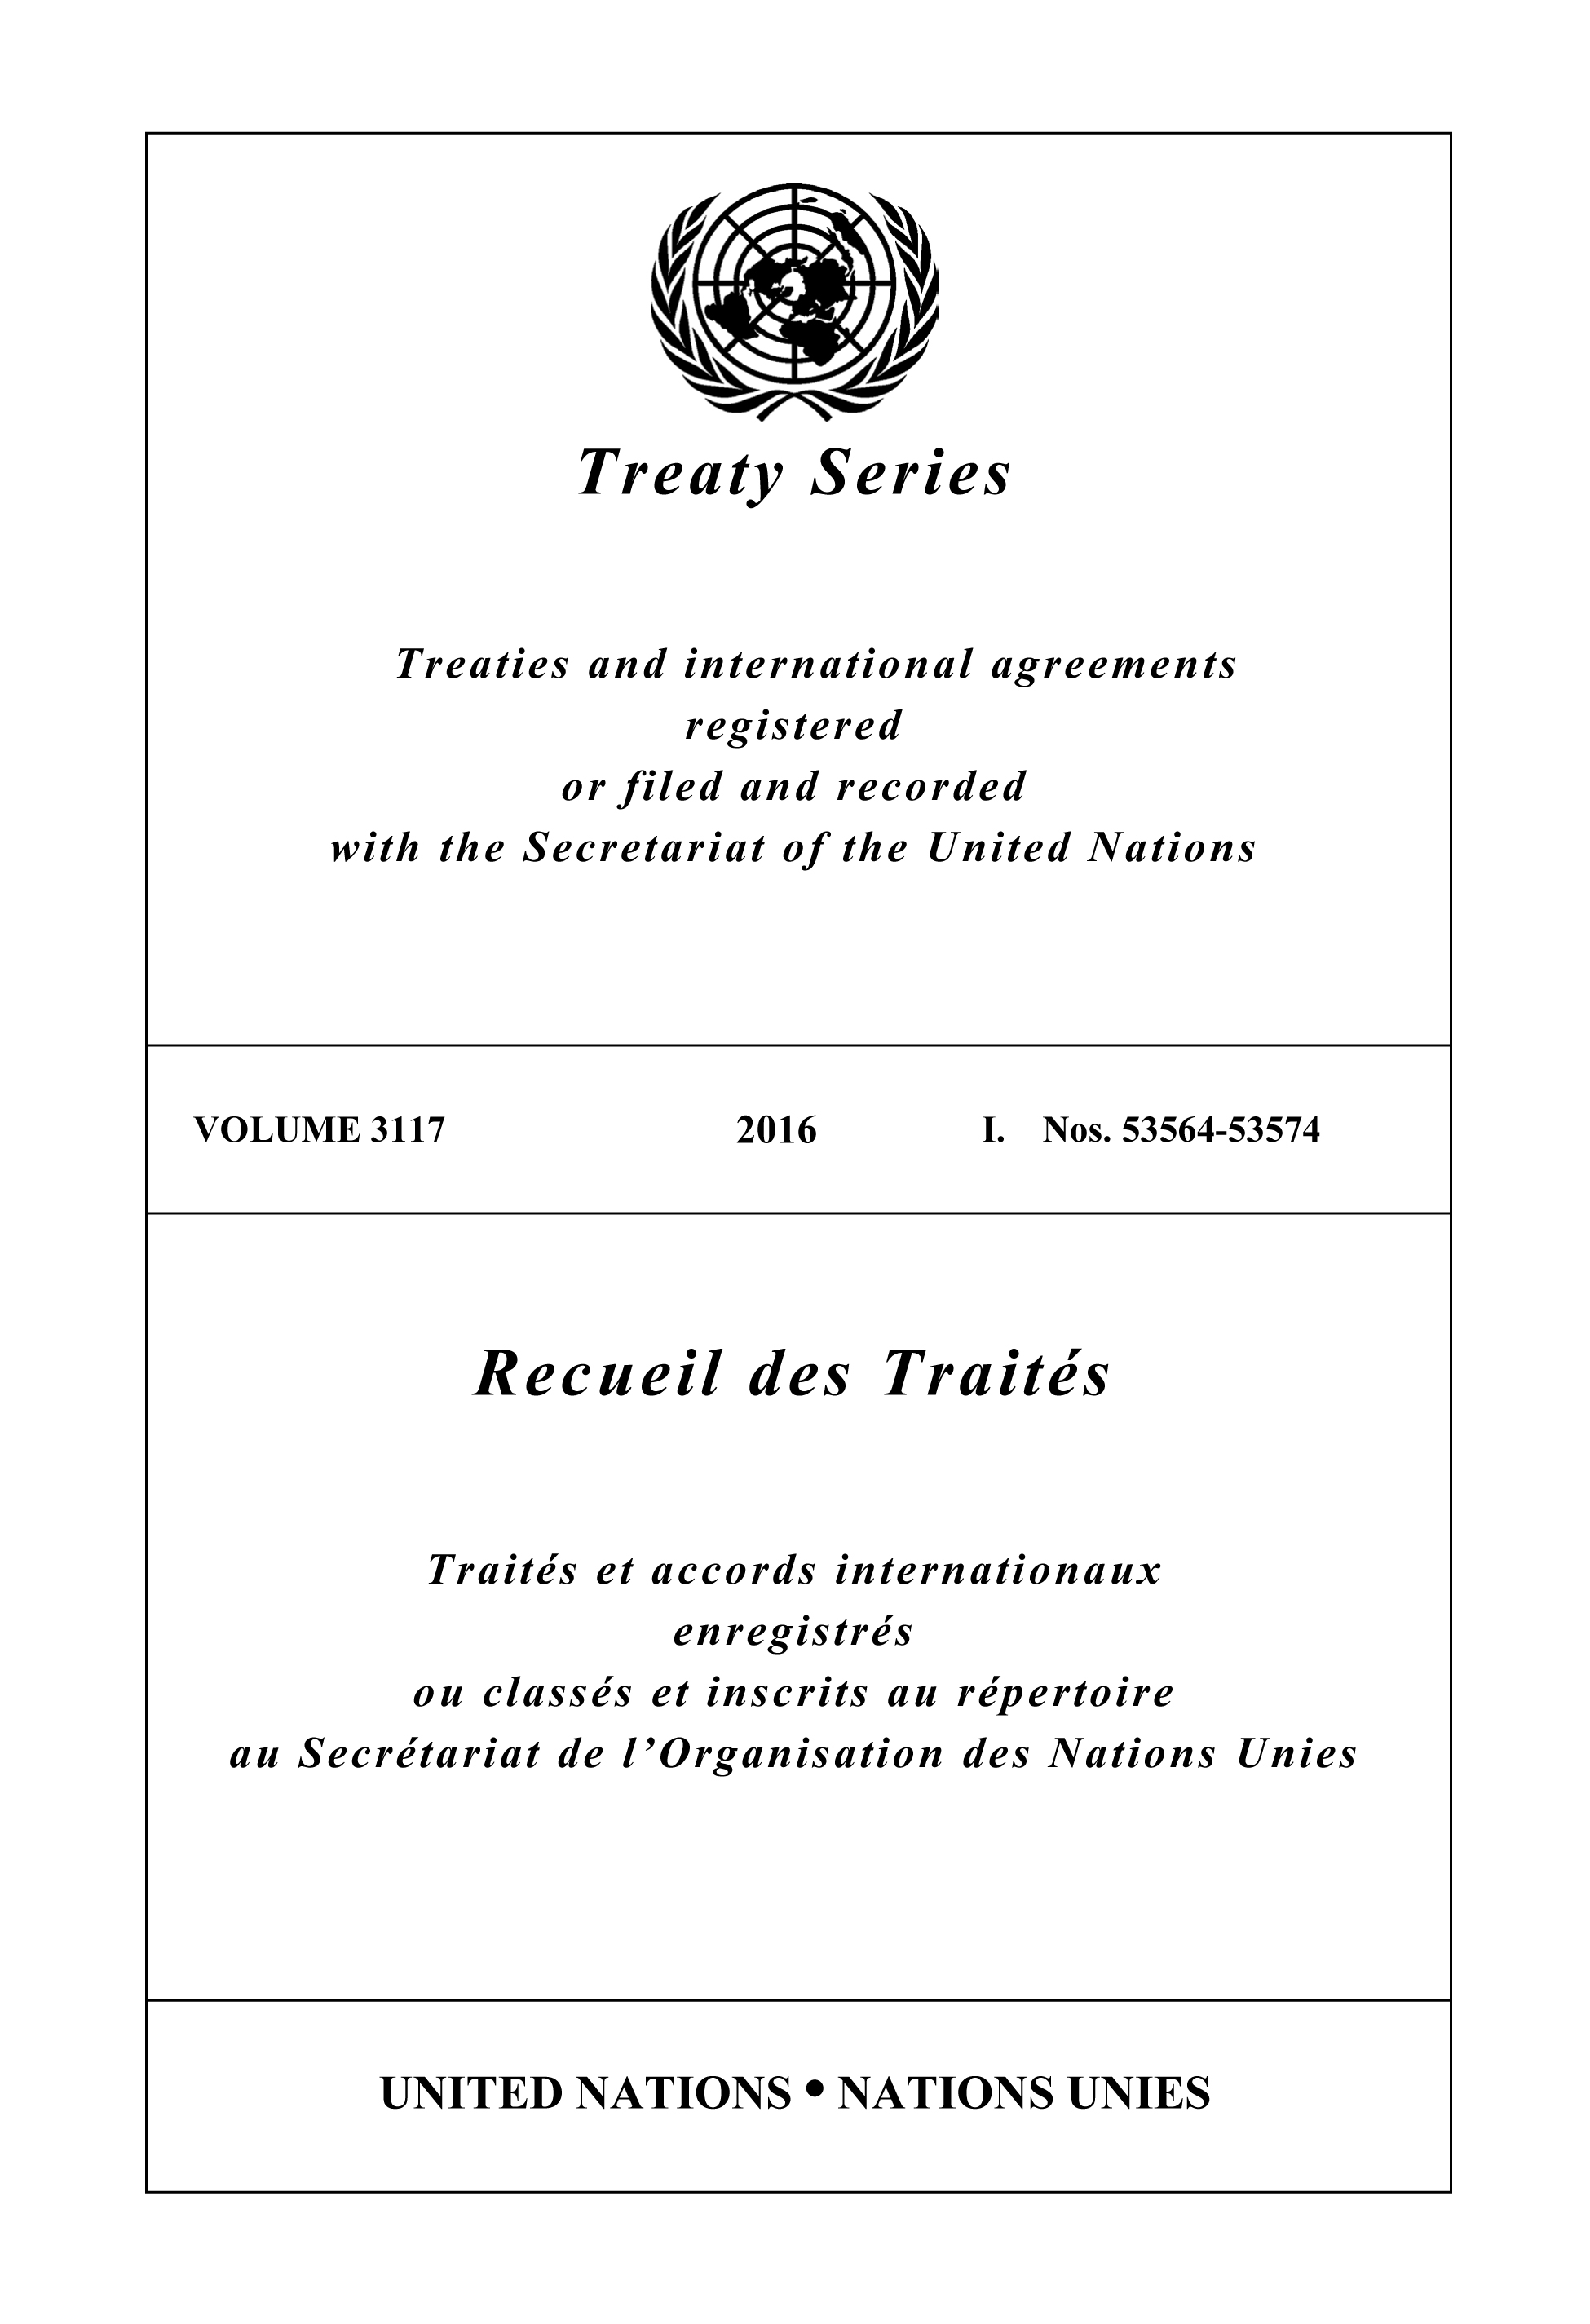 image of Treaty Series 3117